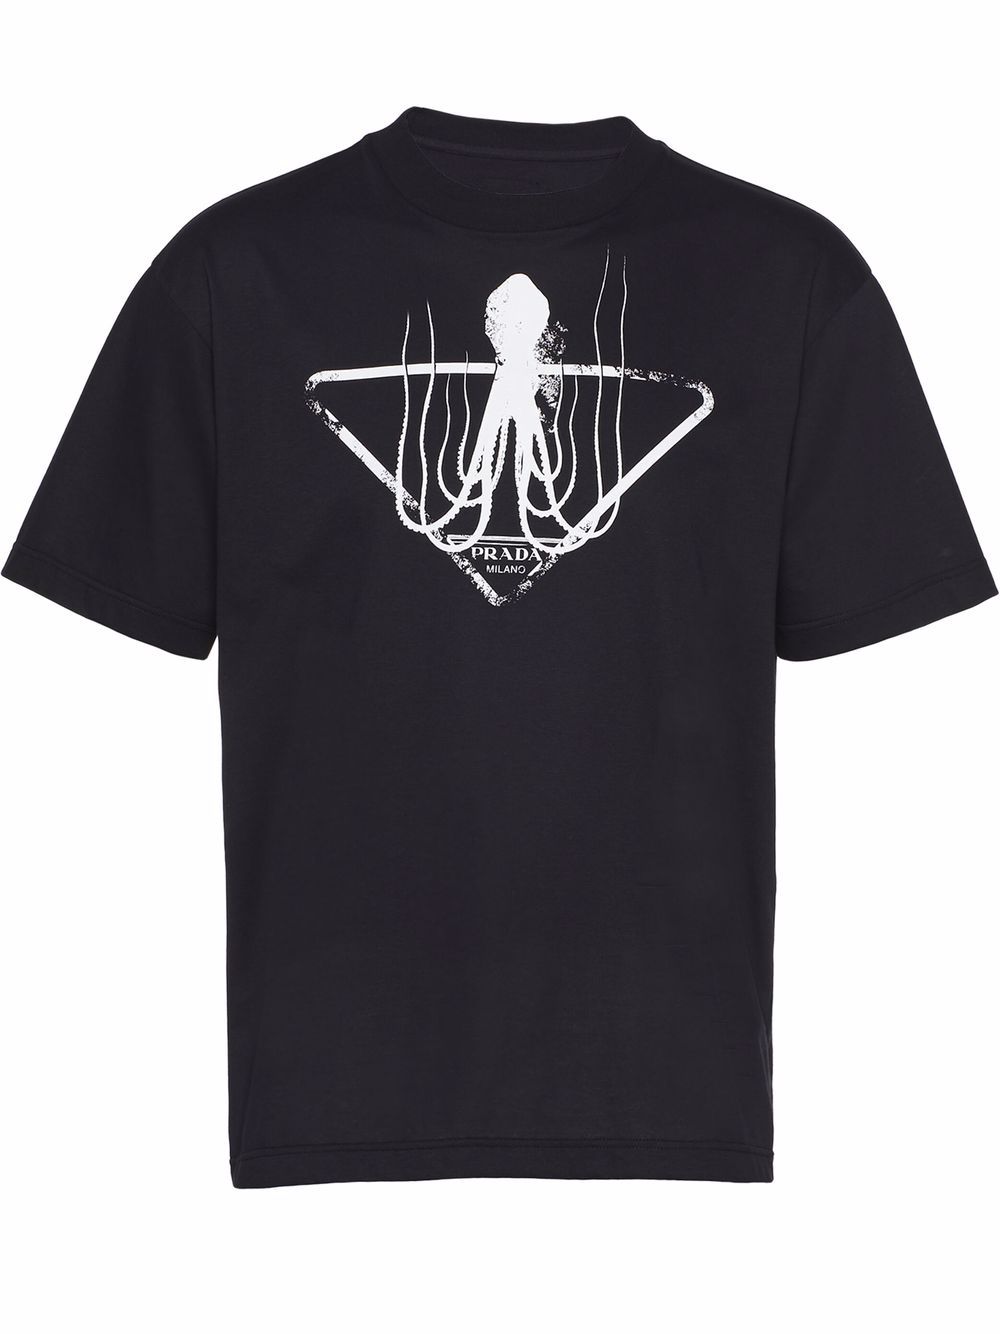 Prada Octopus Print T-shirt Black/White - SS22 - US